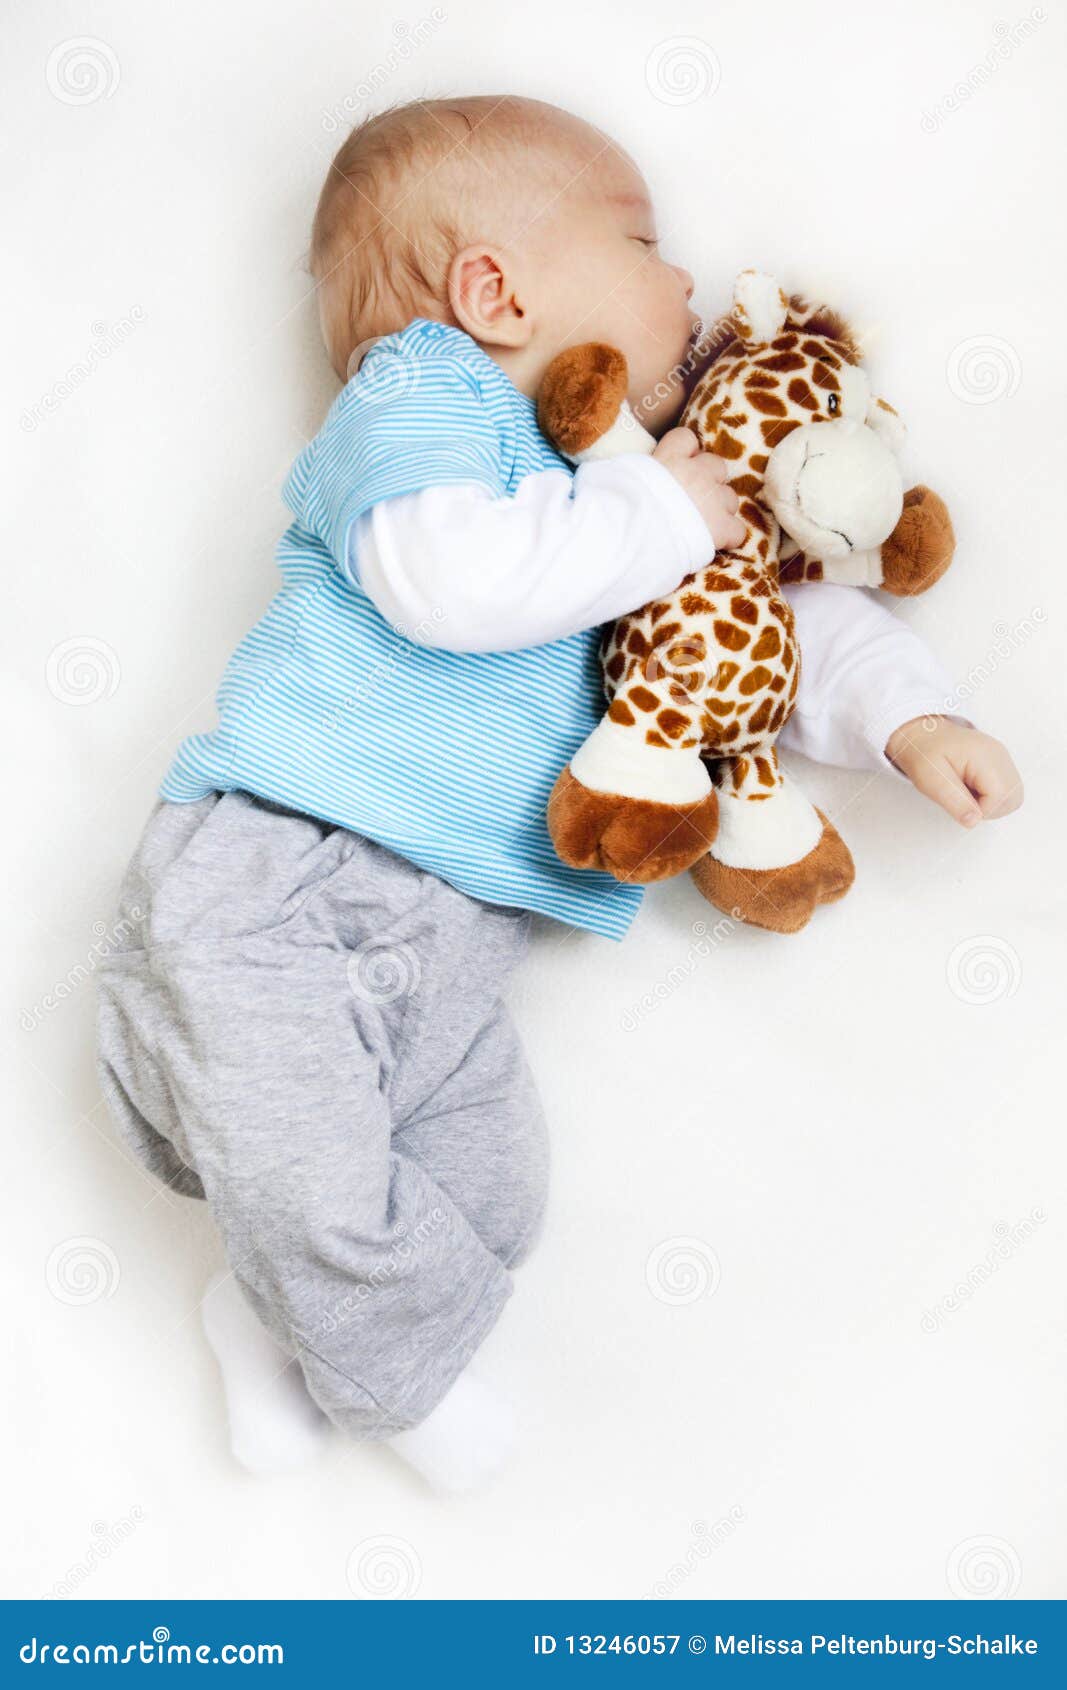 Newborn baby sleeping, holding teddy bear on white blanket